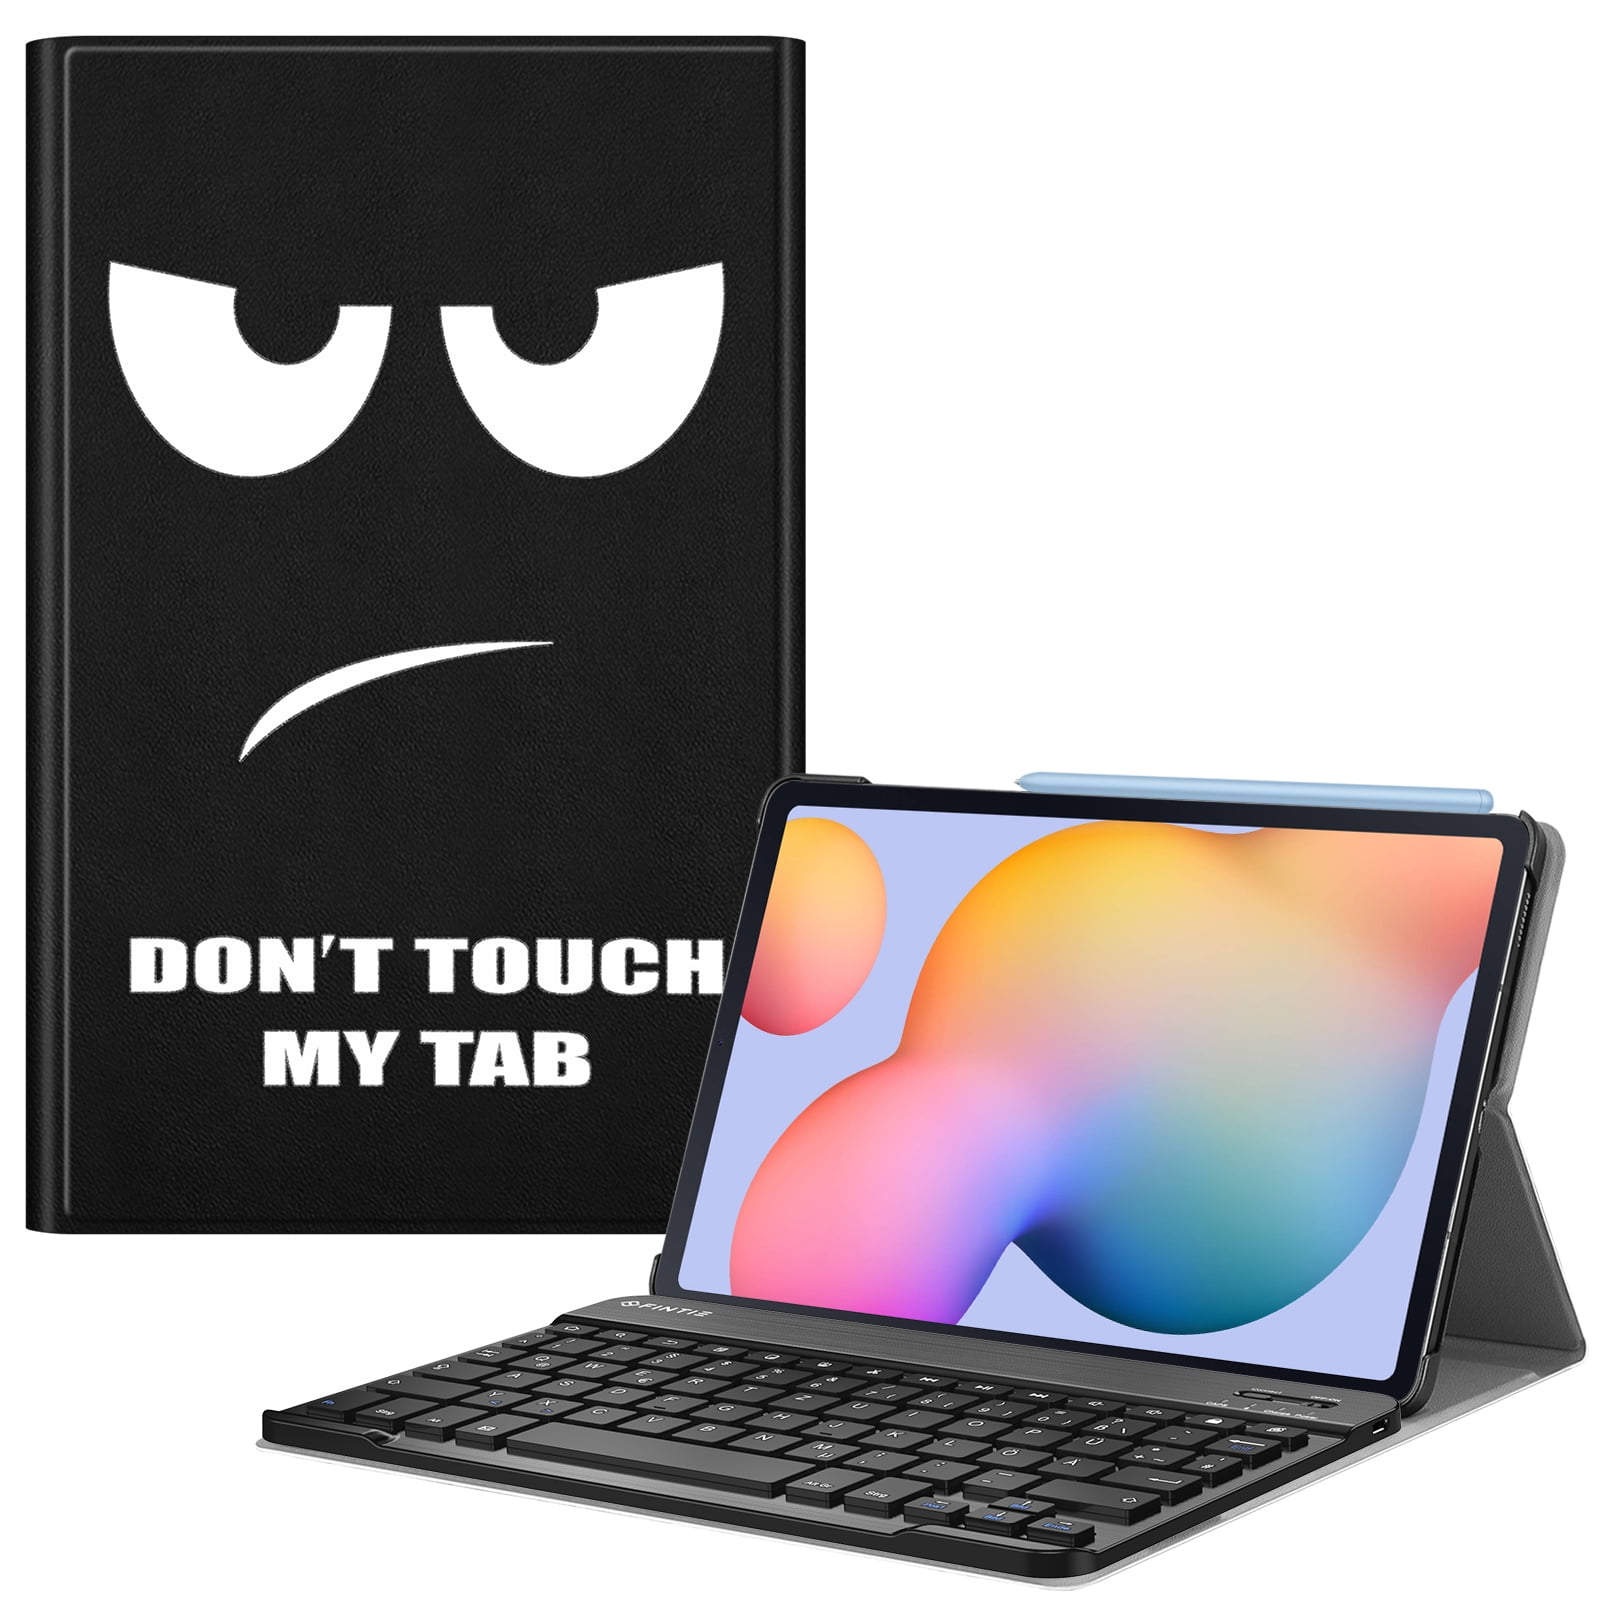 Galaxy Tab S6 Lite 10.4 Case with Keyboard Premium Slim Folio Stand Cover for Samsung Galaxy Tab S6 Lite 10.4 Inch SM-P610 SM-P615 2020 Detachable Wireless Keyboard Black 